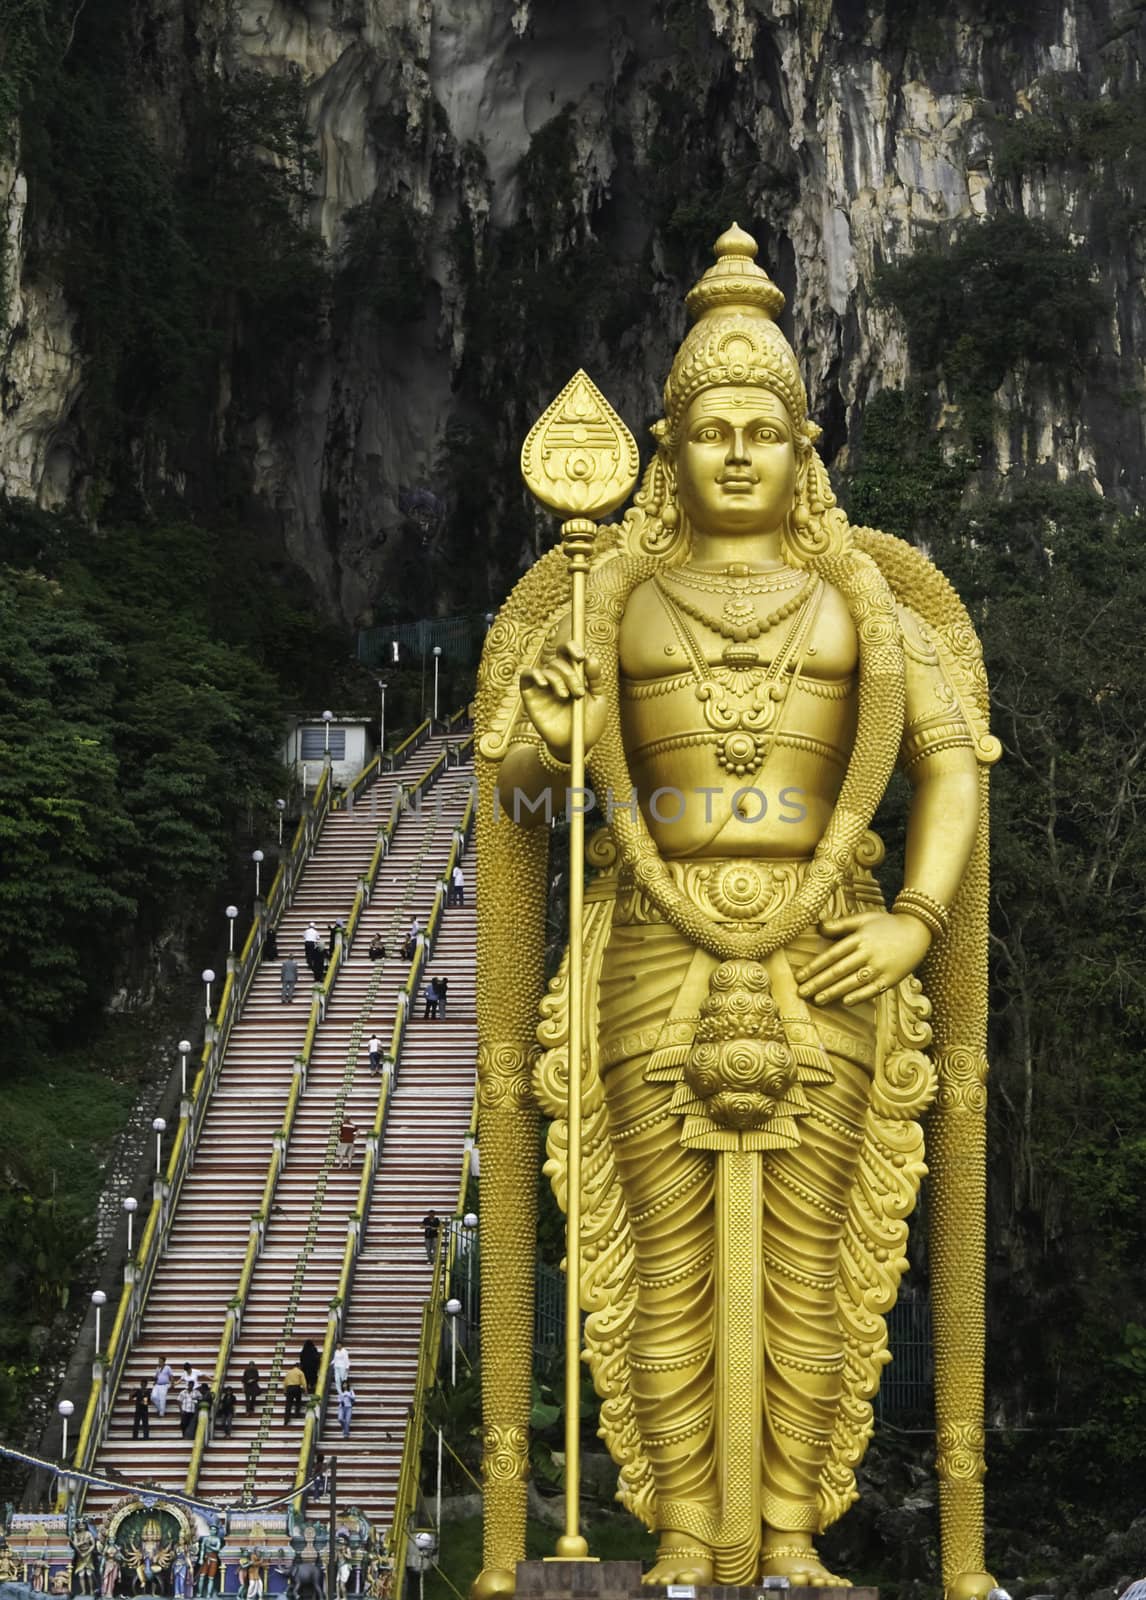 Golden statue in front of Batu caves in Kuala Lumpur, Malaysia